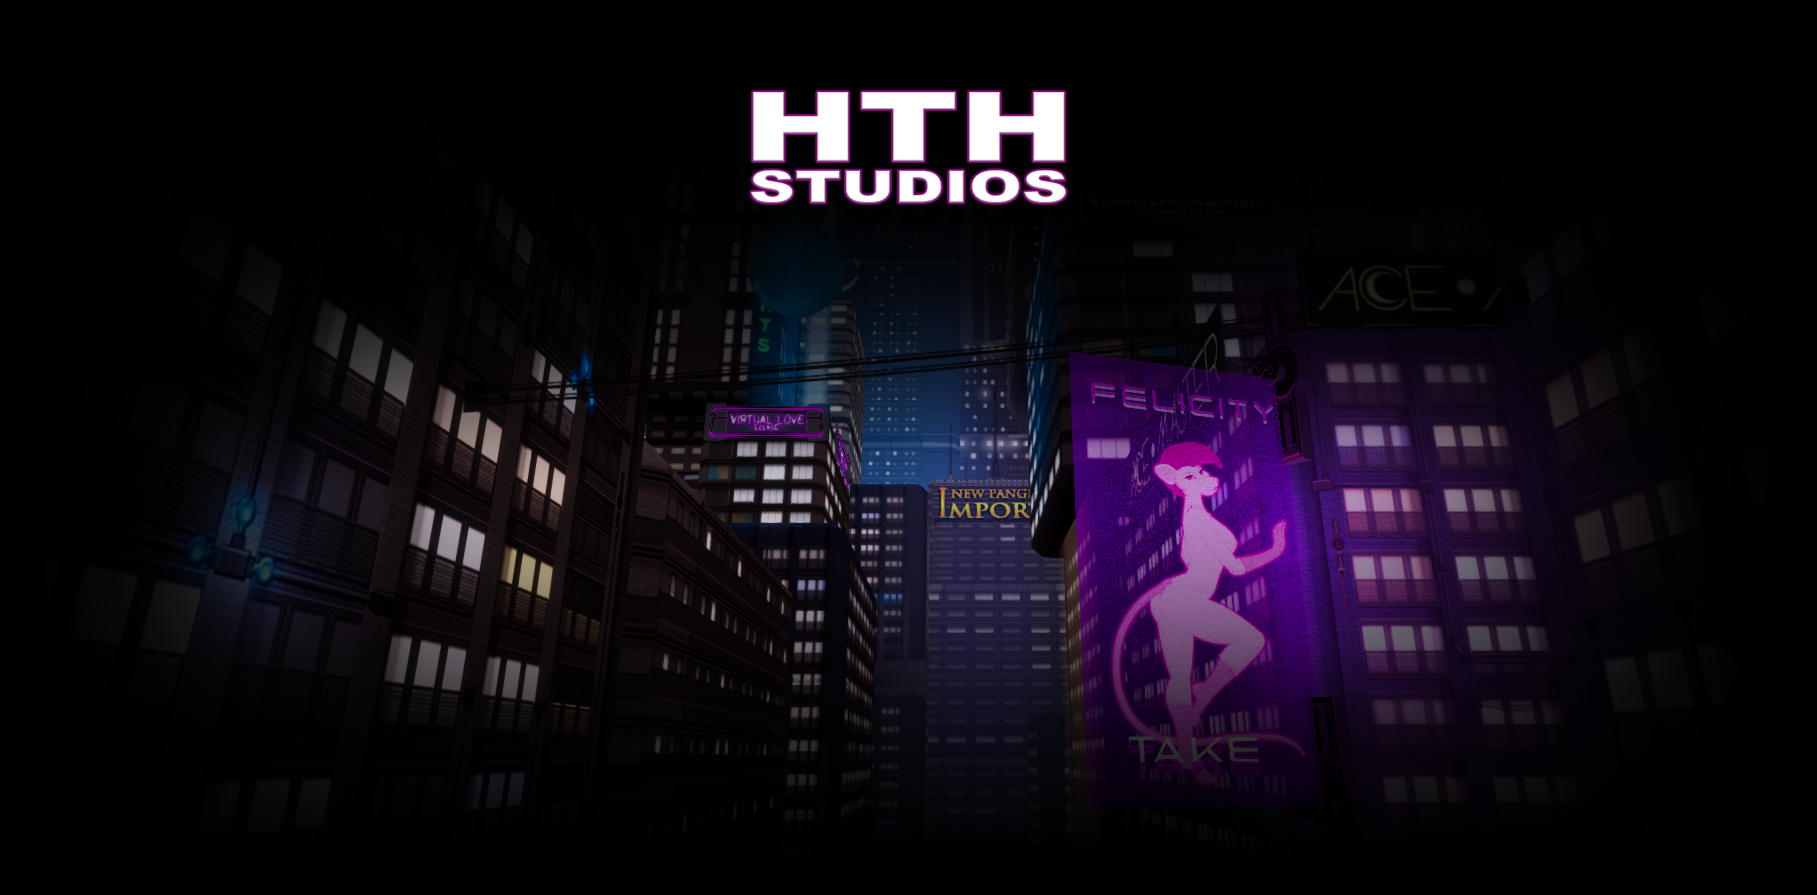 Hth studios